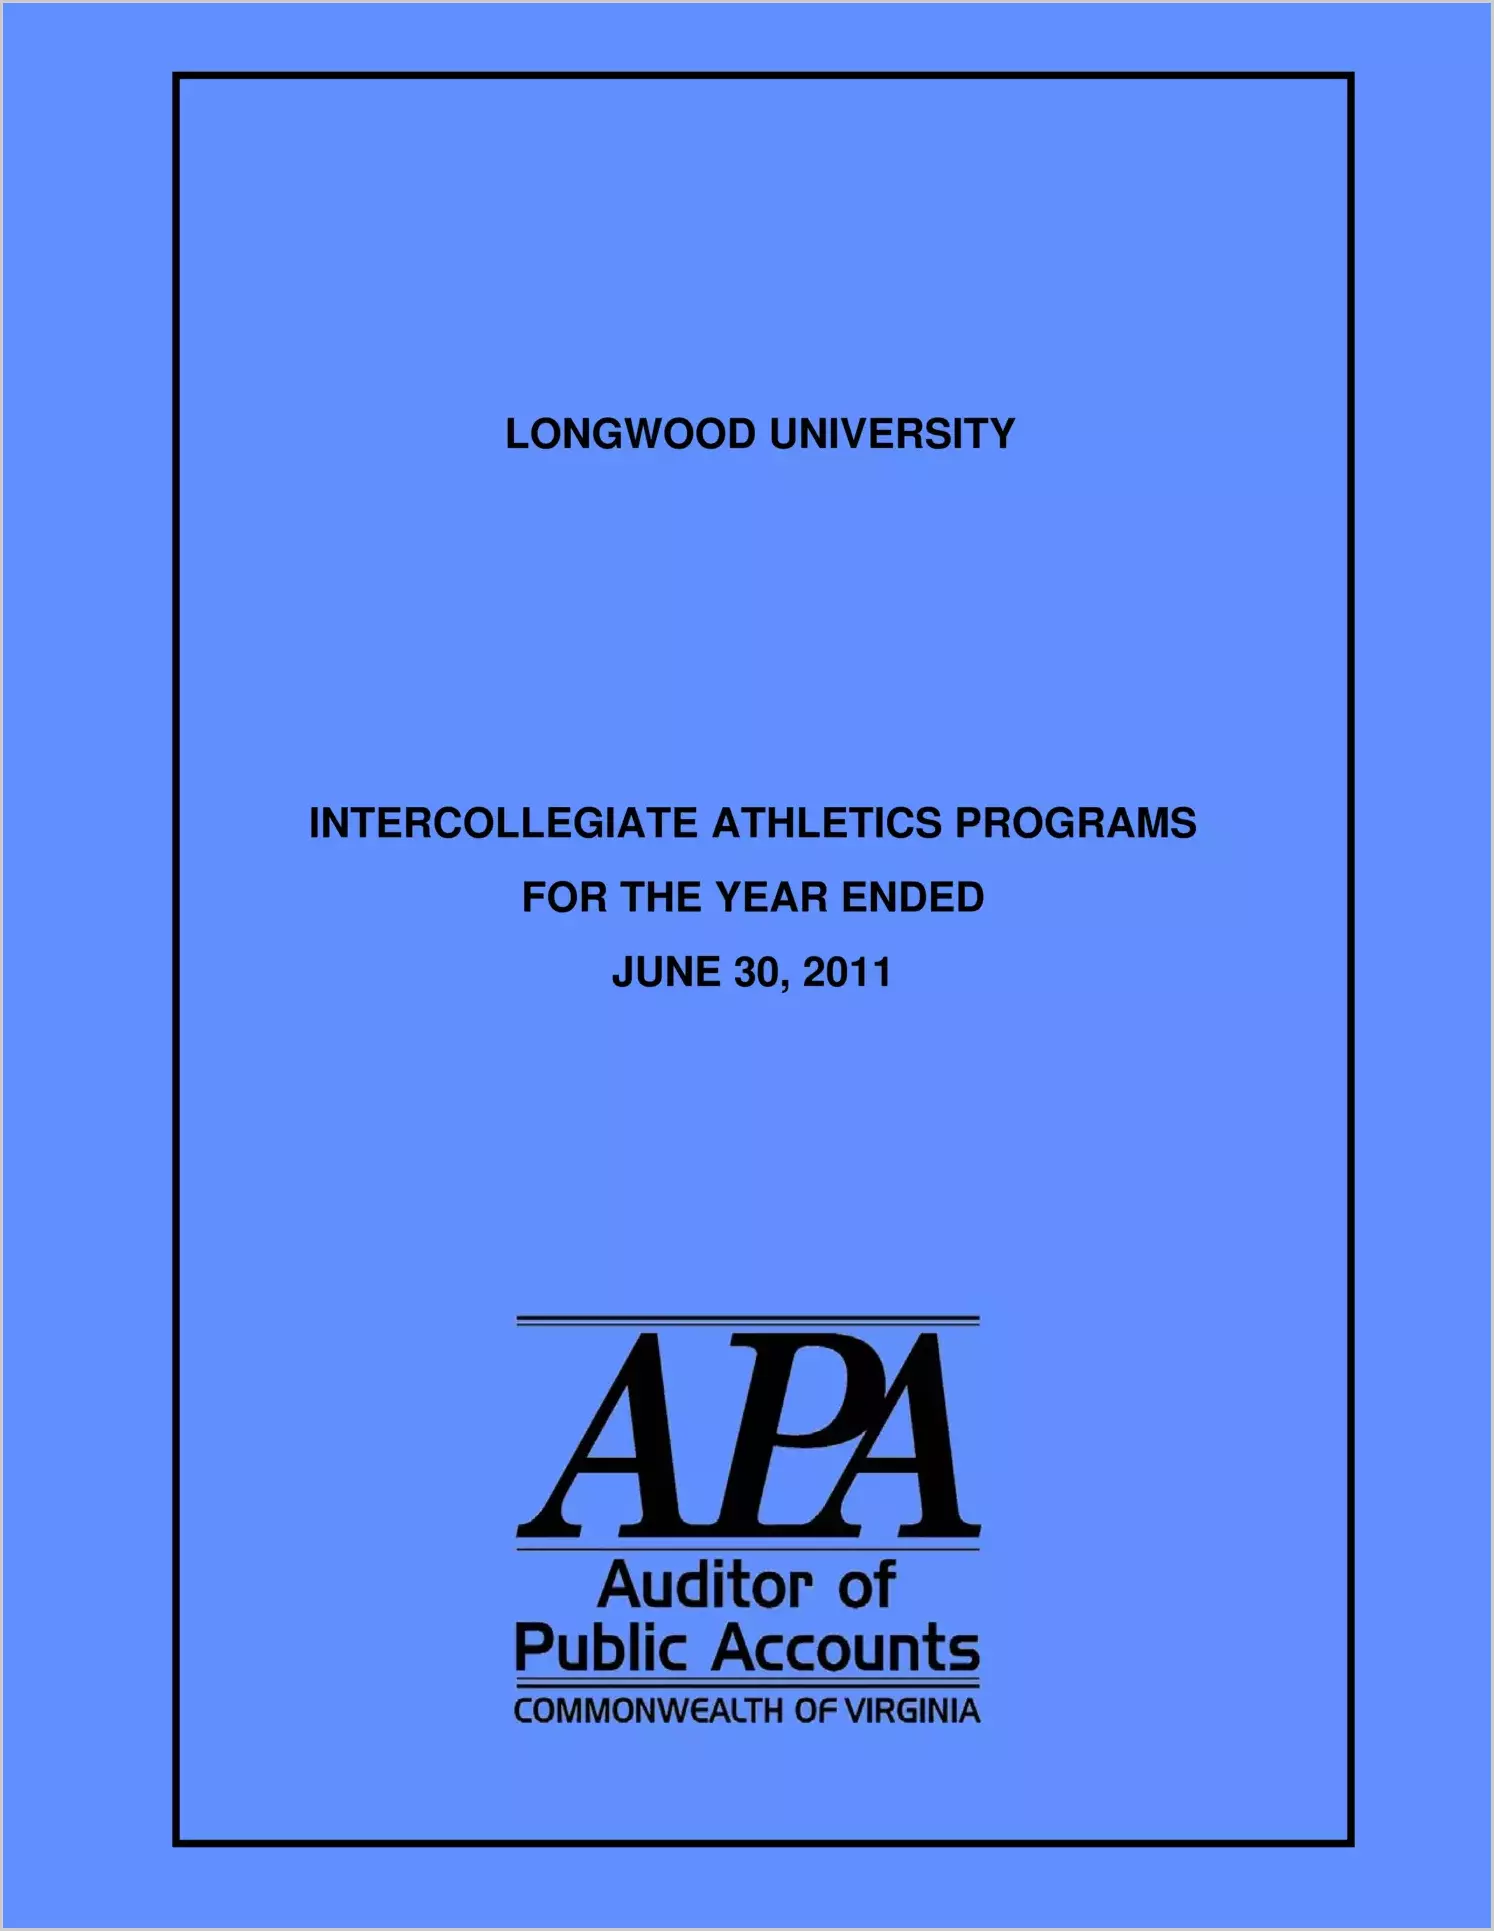 Longwood University Intercollegiate Athletics Programs report for the year ended June 30, 2011